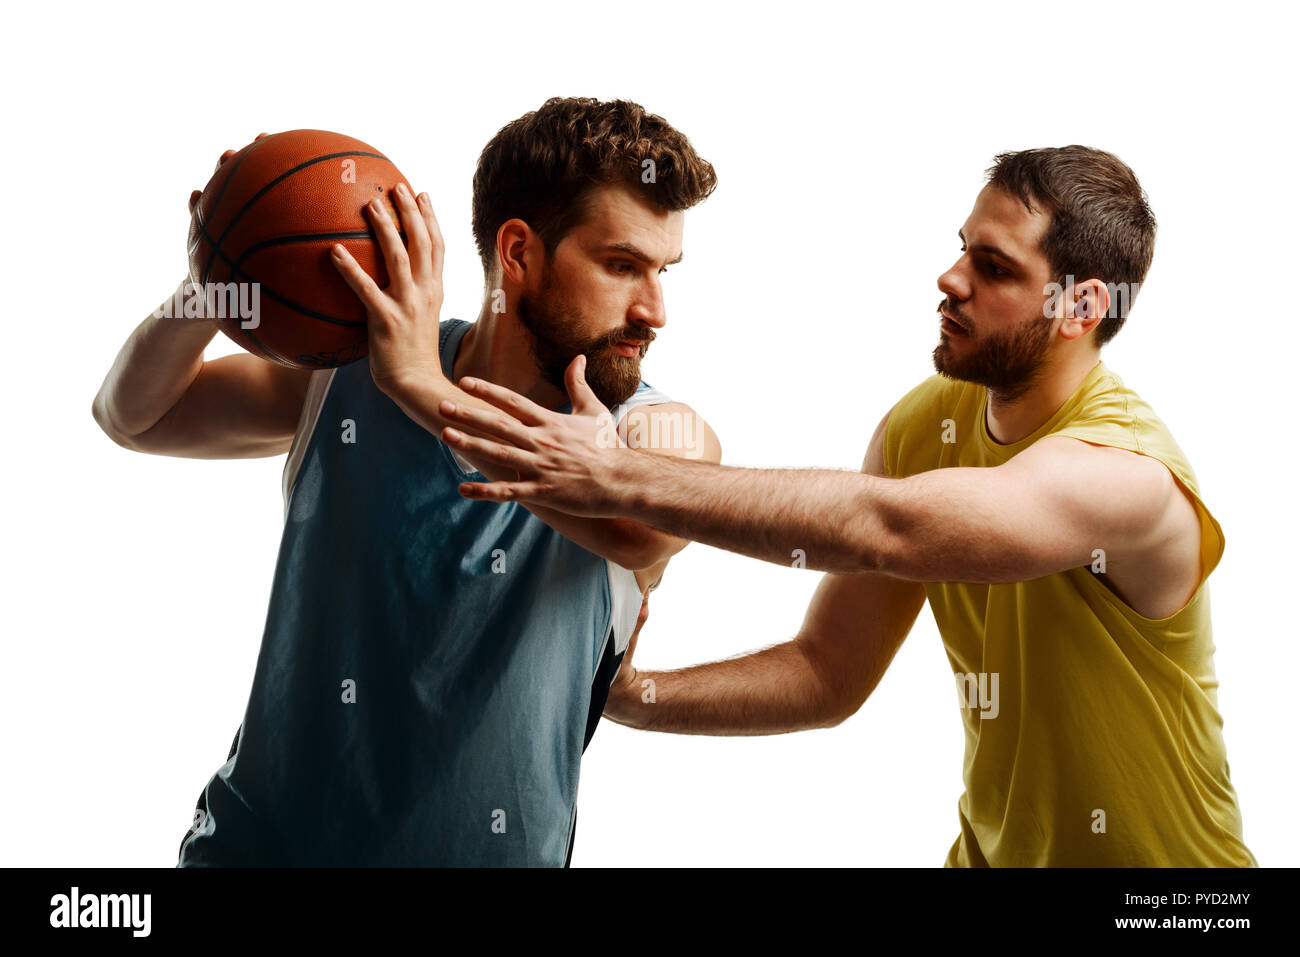 Basketball players fighting for ball Stock Photo